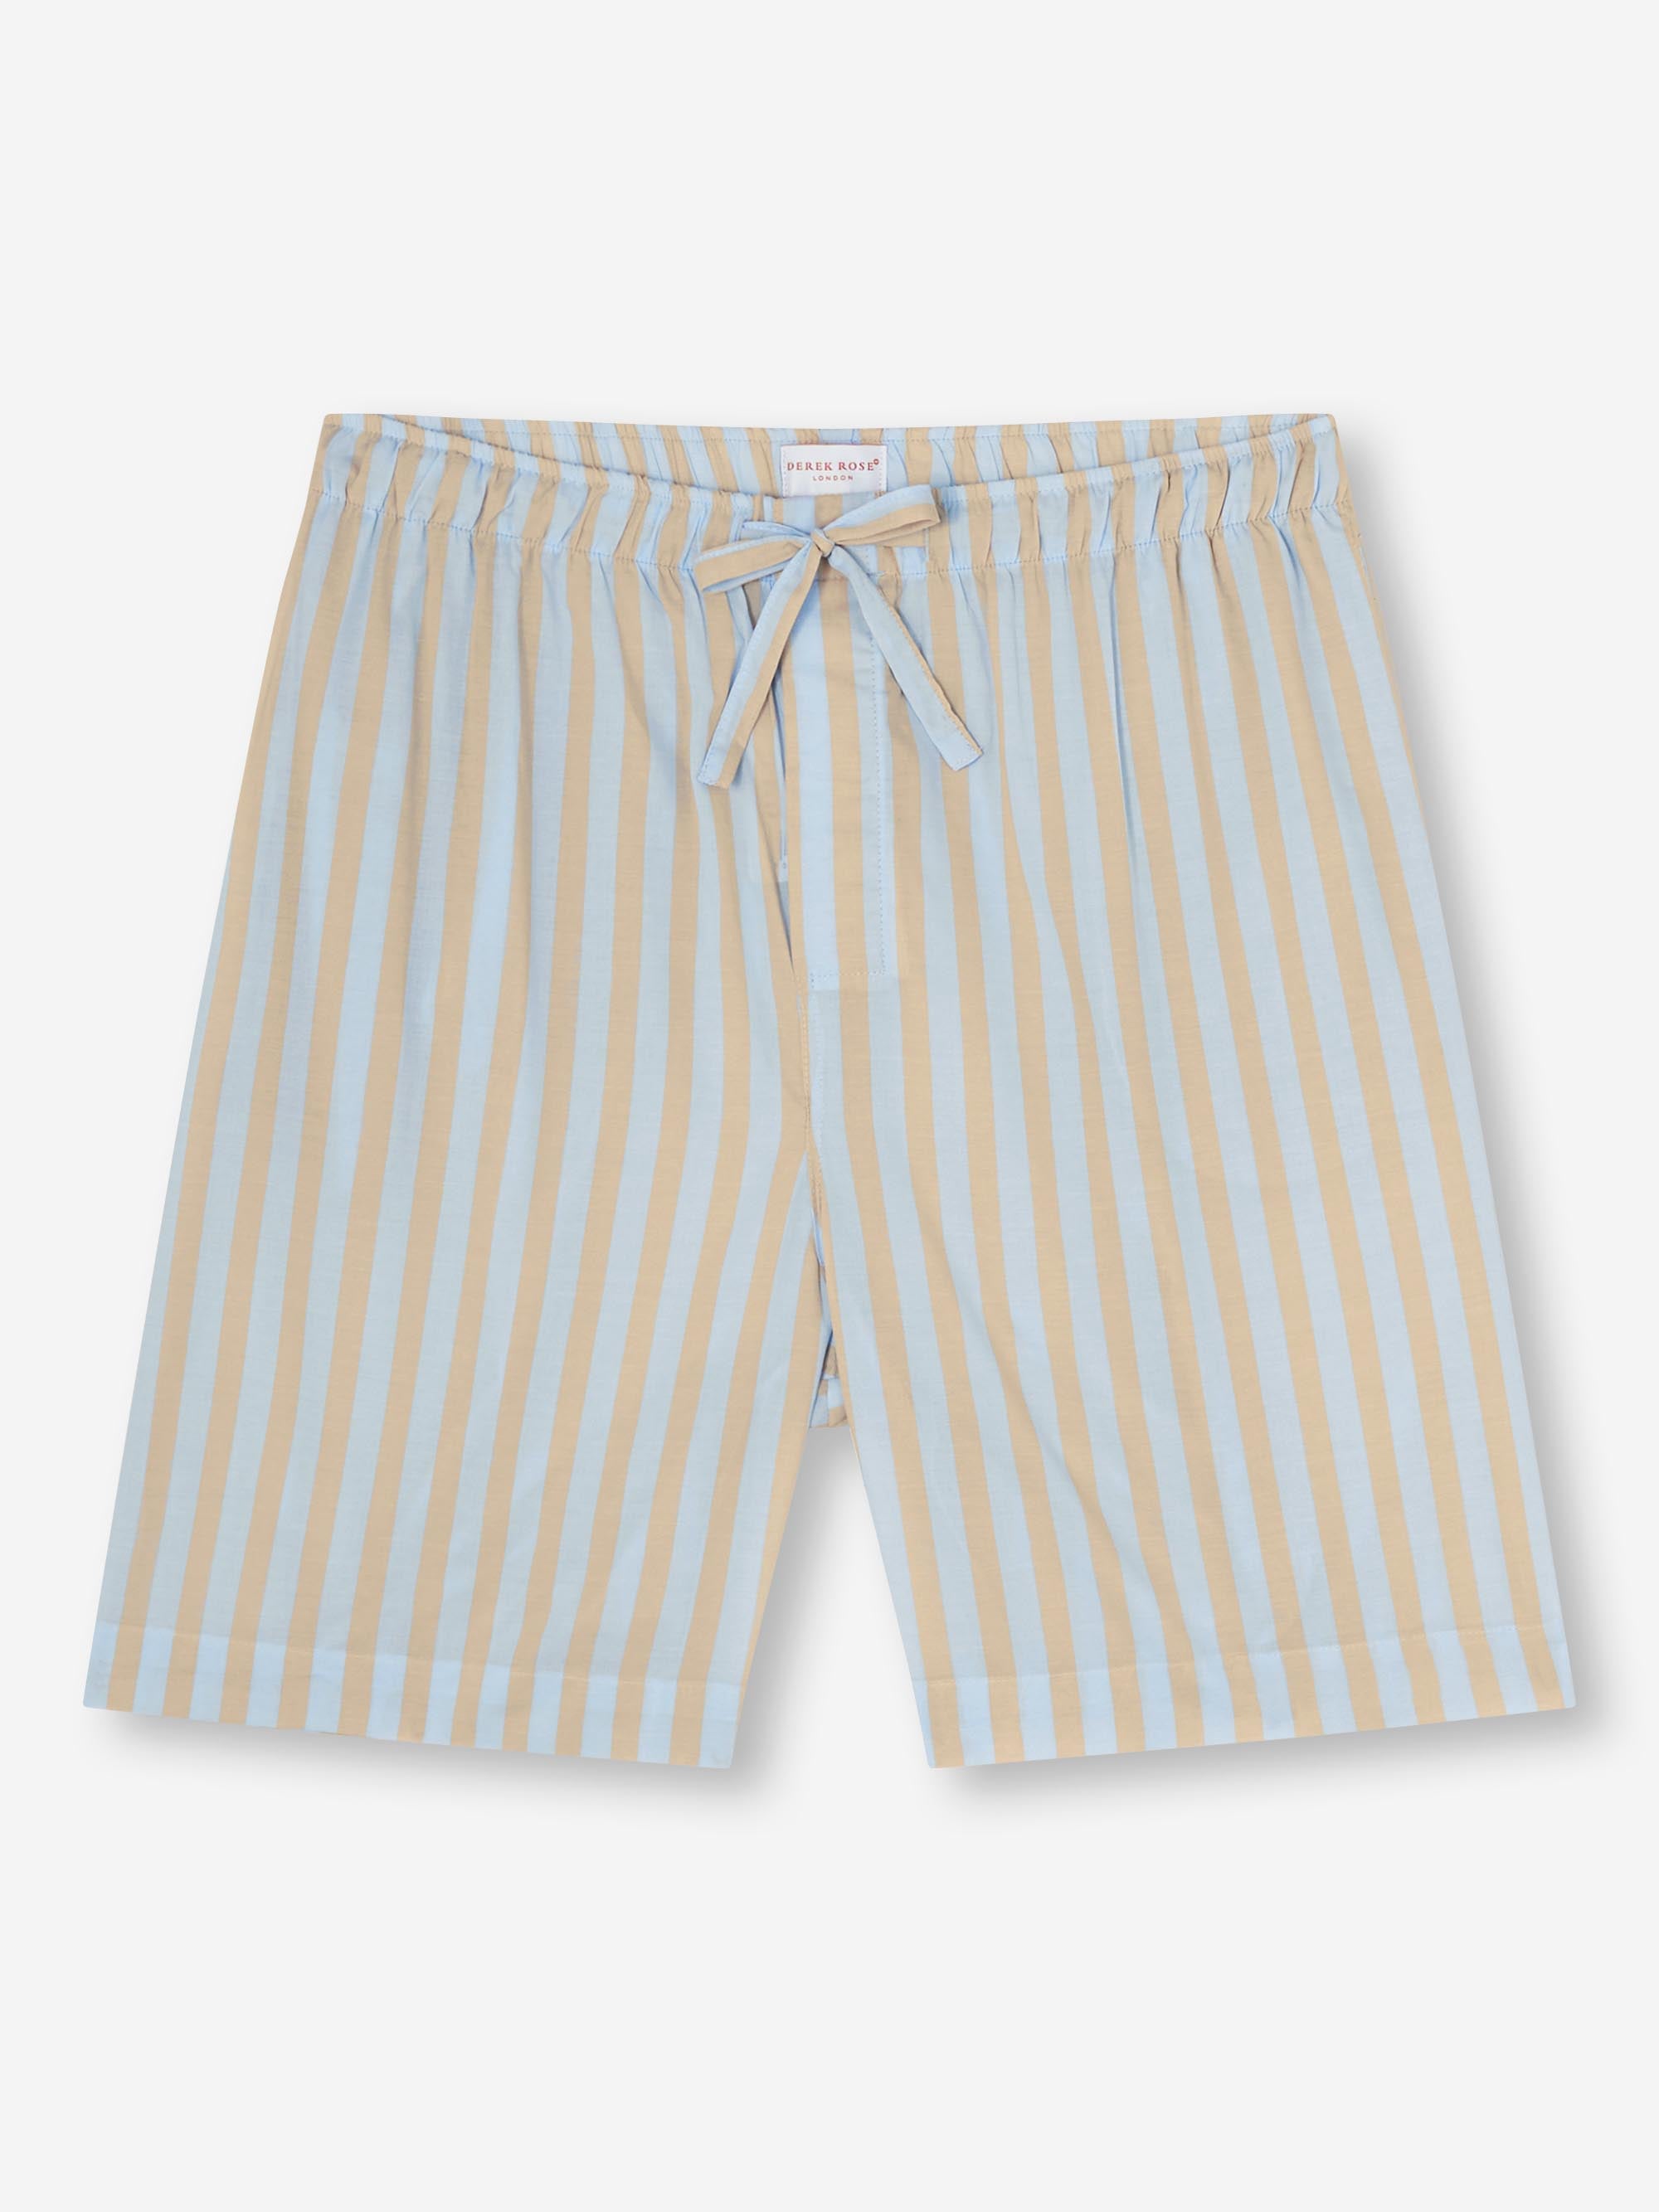 Men's Lounge Shorts Amalfi 20 Cotton Batiste Blue